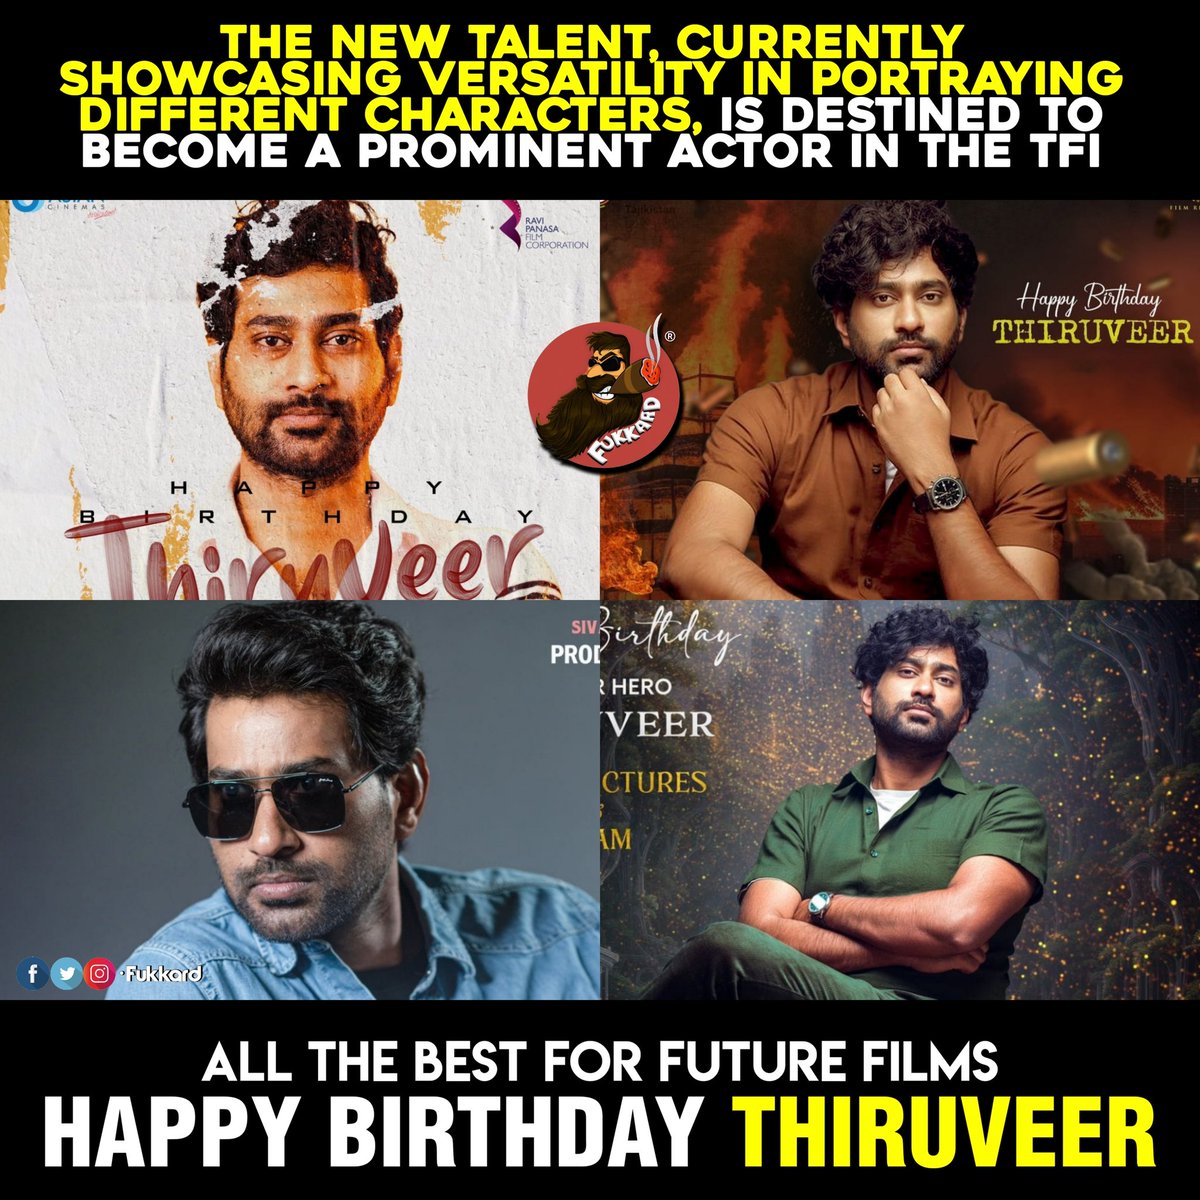 Happy Birthday #Thiruveer.
#HBDThiruveer